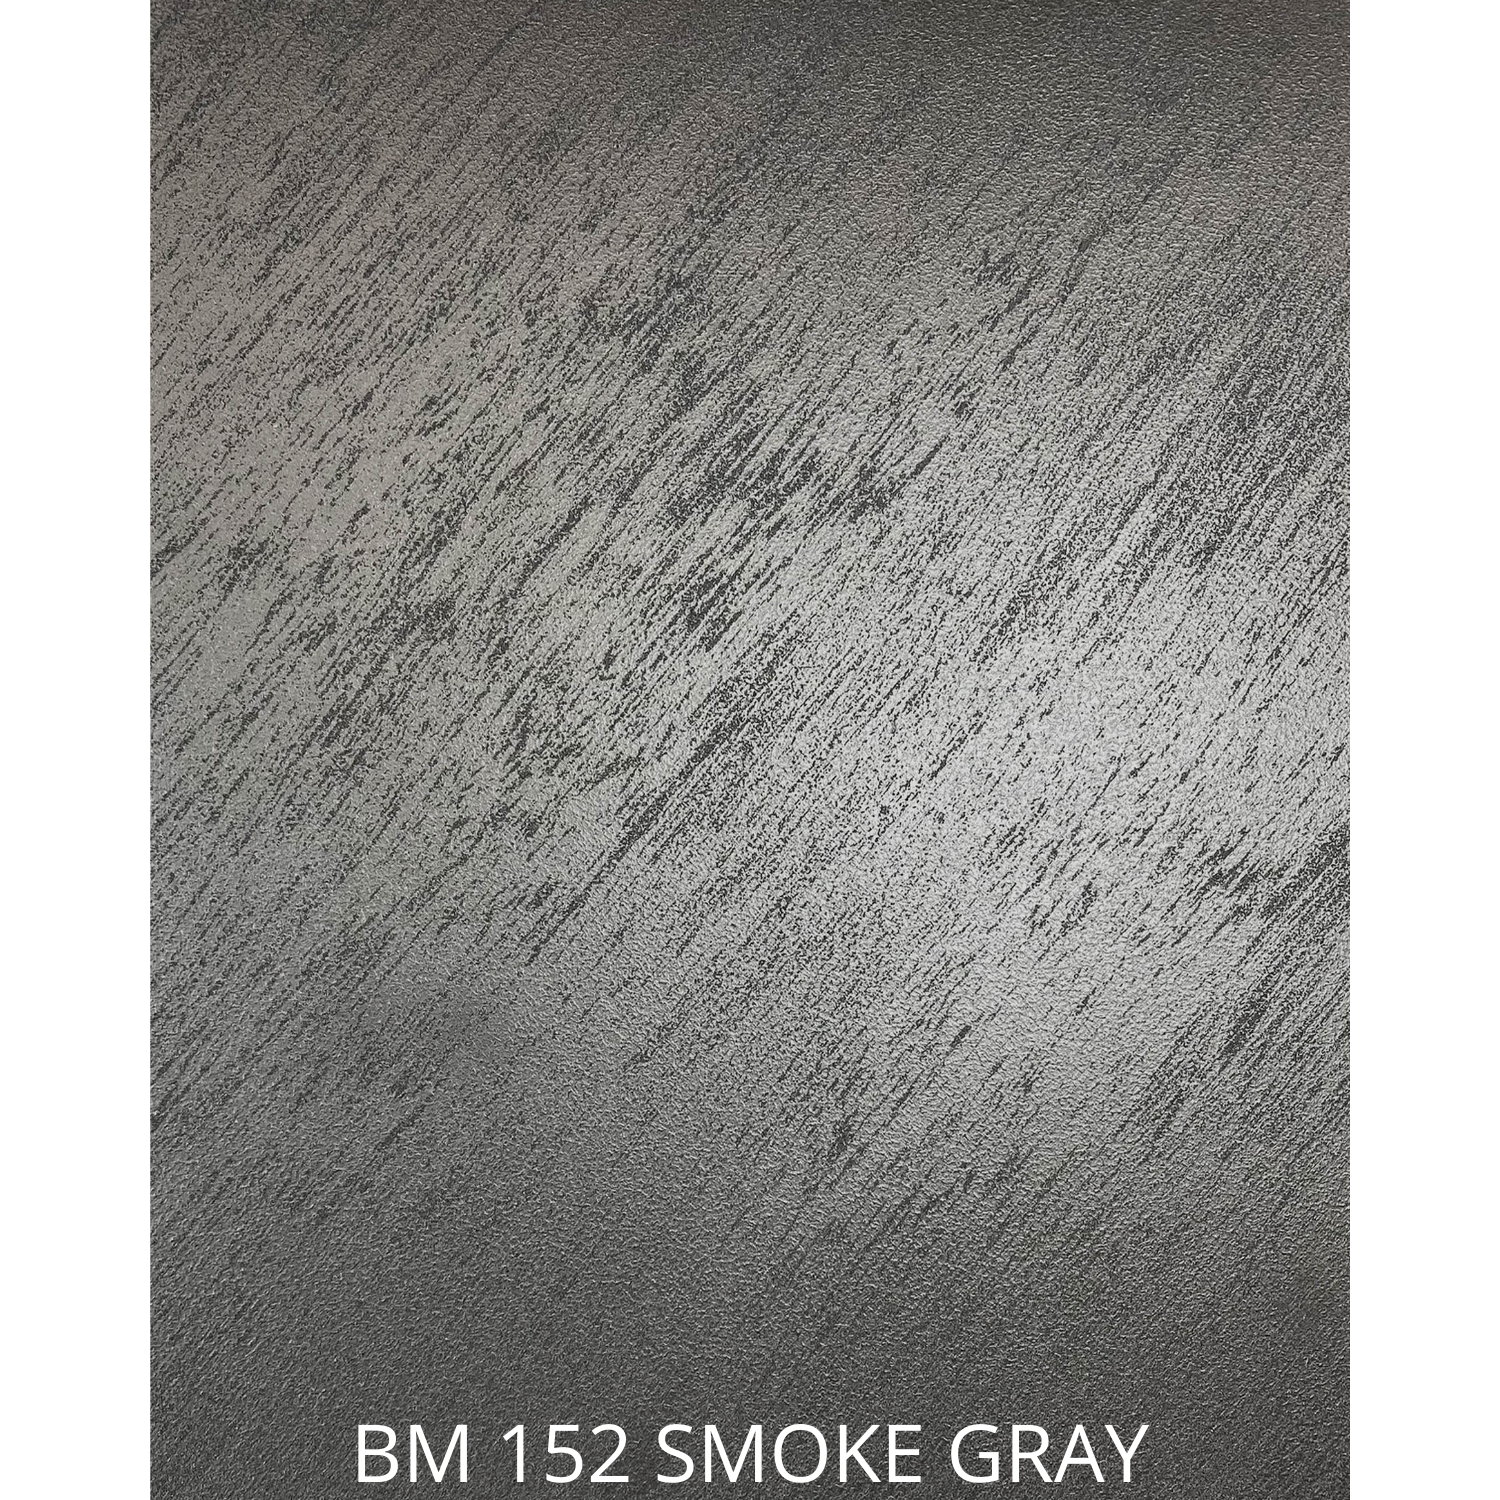 BM 152 SMOKE GRAY